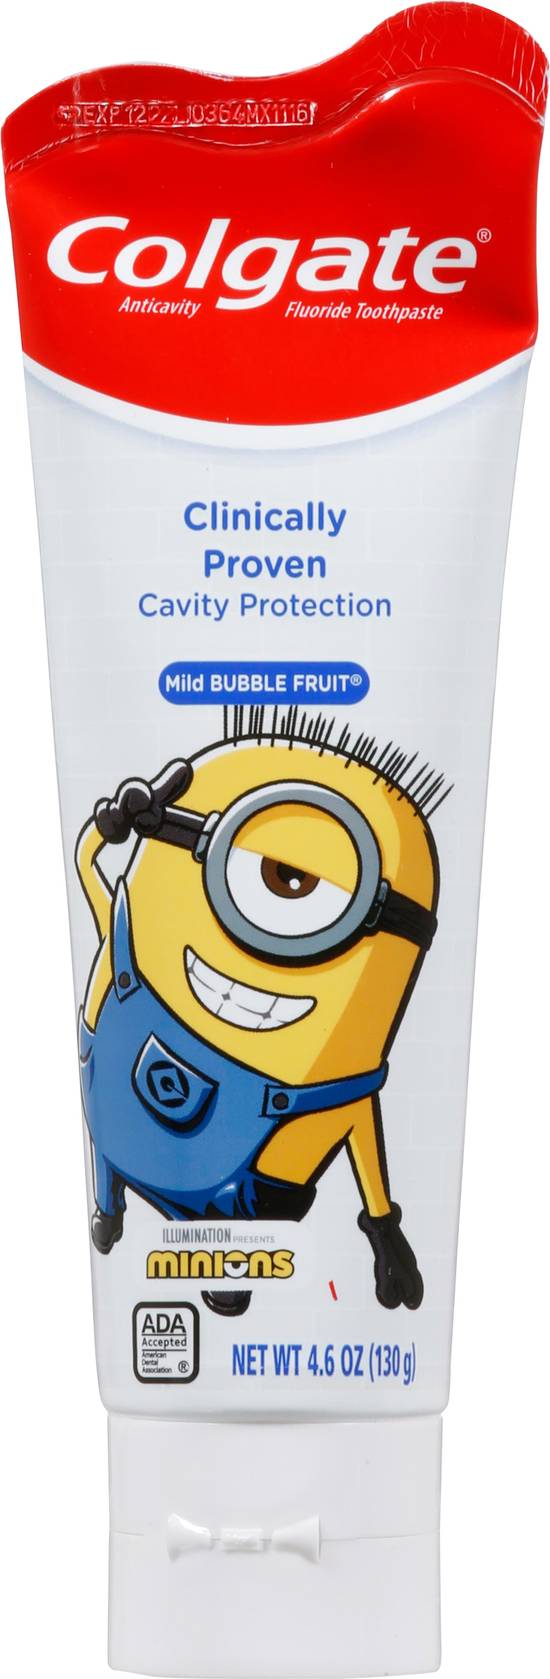 Colgate Cavity Protection Fluoride Mild Bubble Fruit Toothpaste